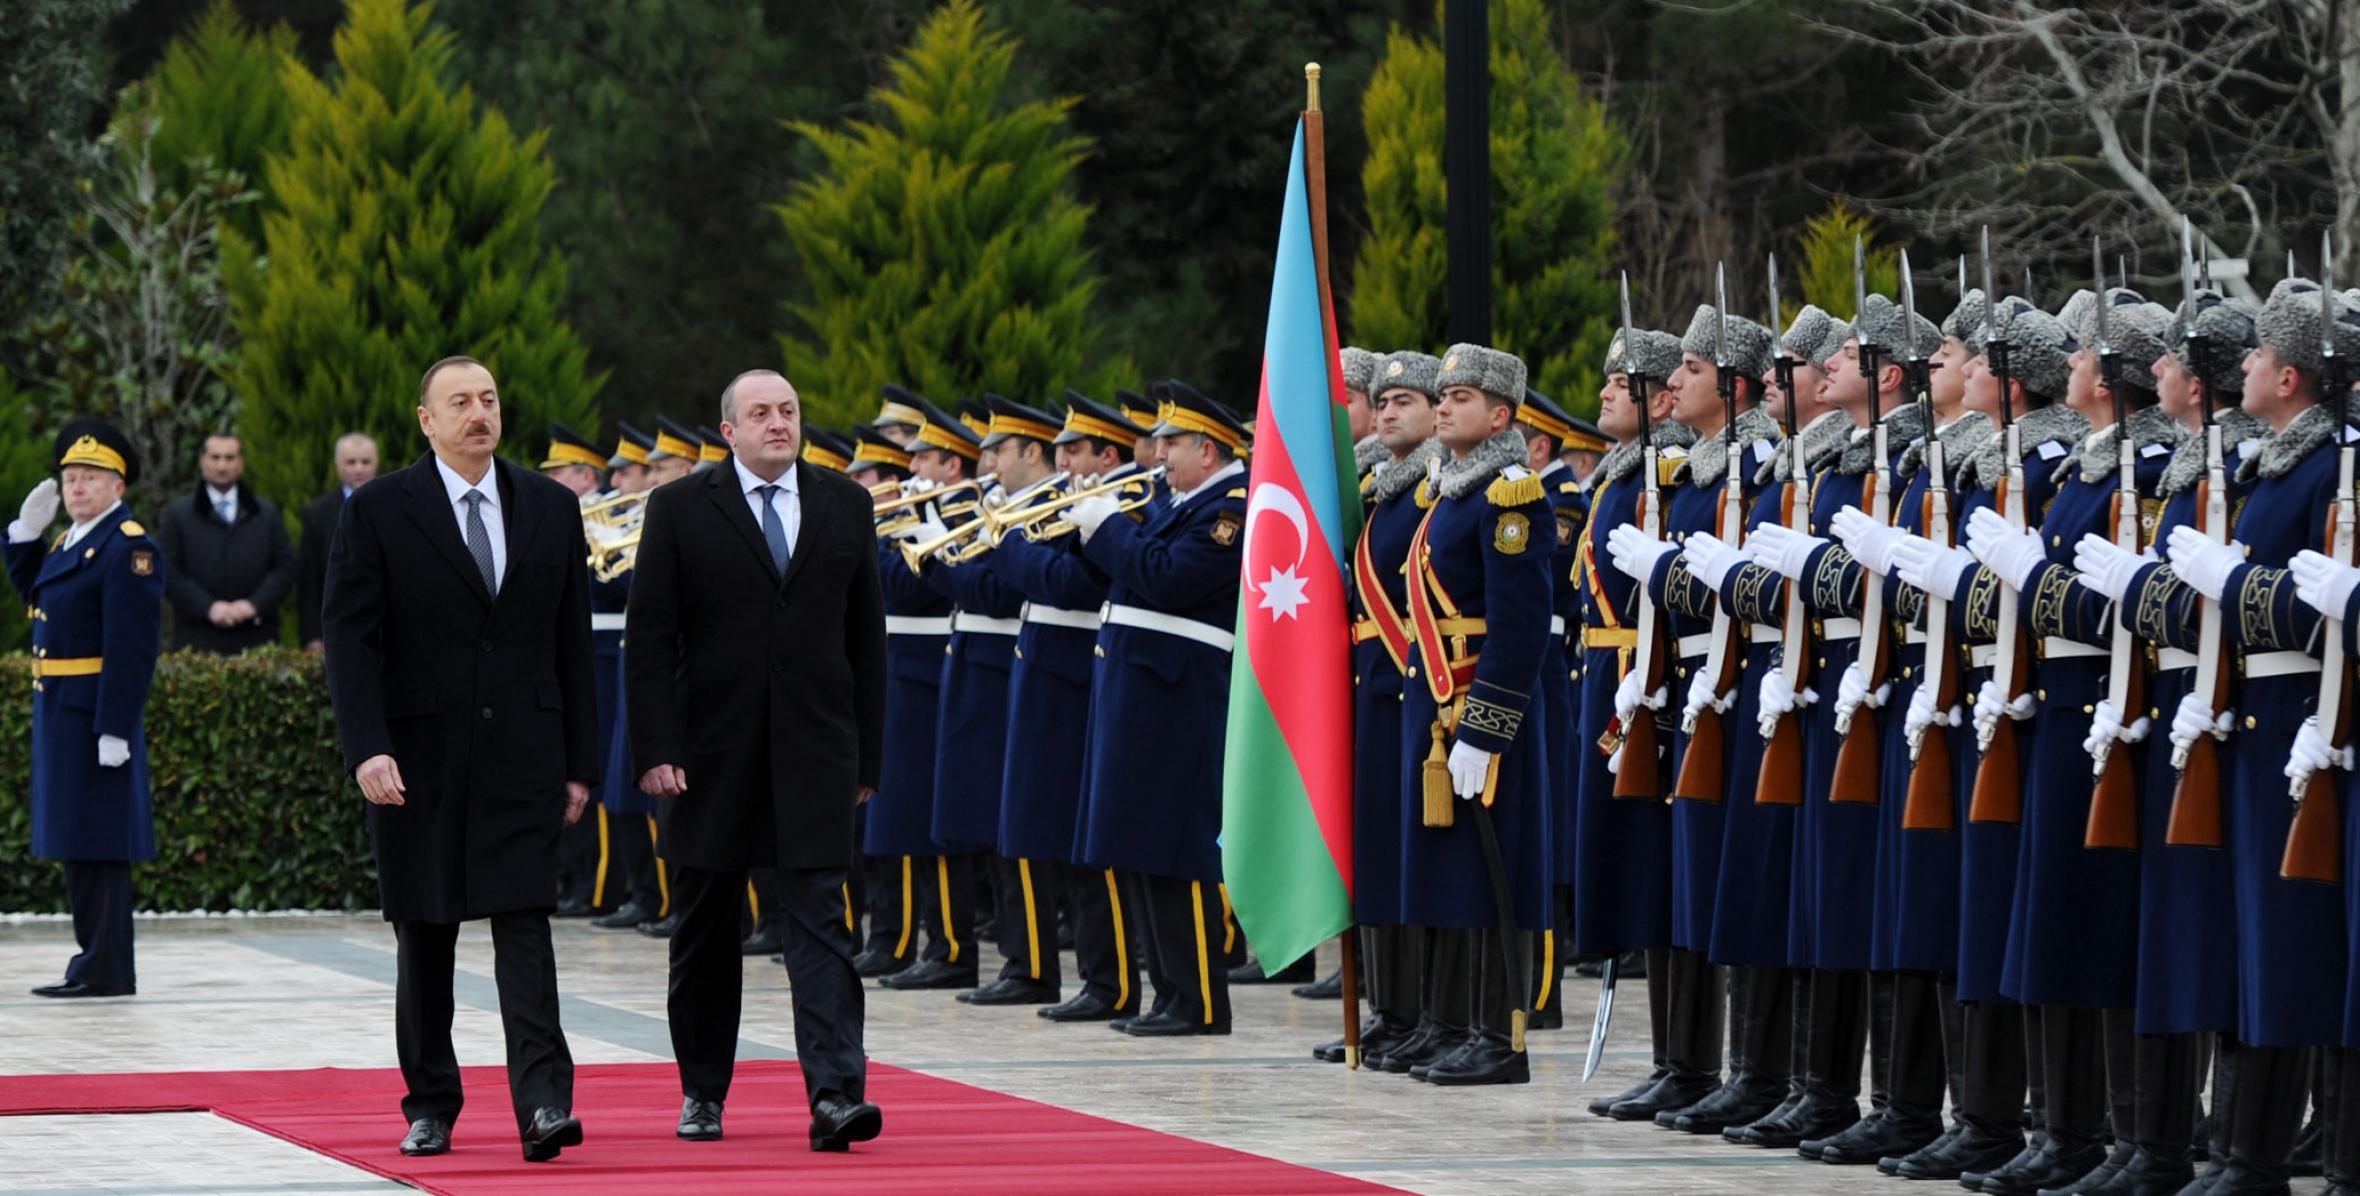 Official meeting ceremony of President of Georgia Giorgi Margvelashvili was held